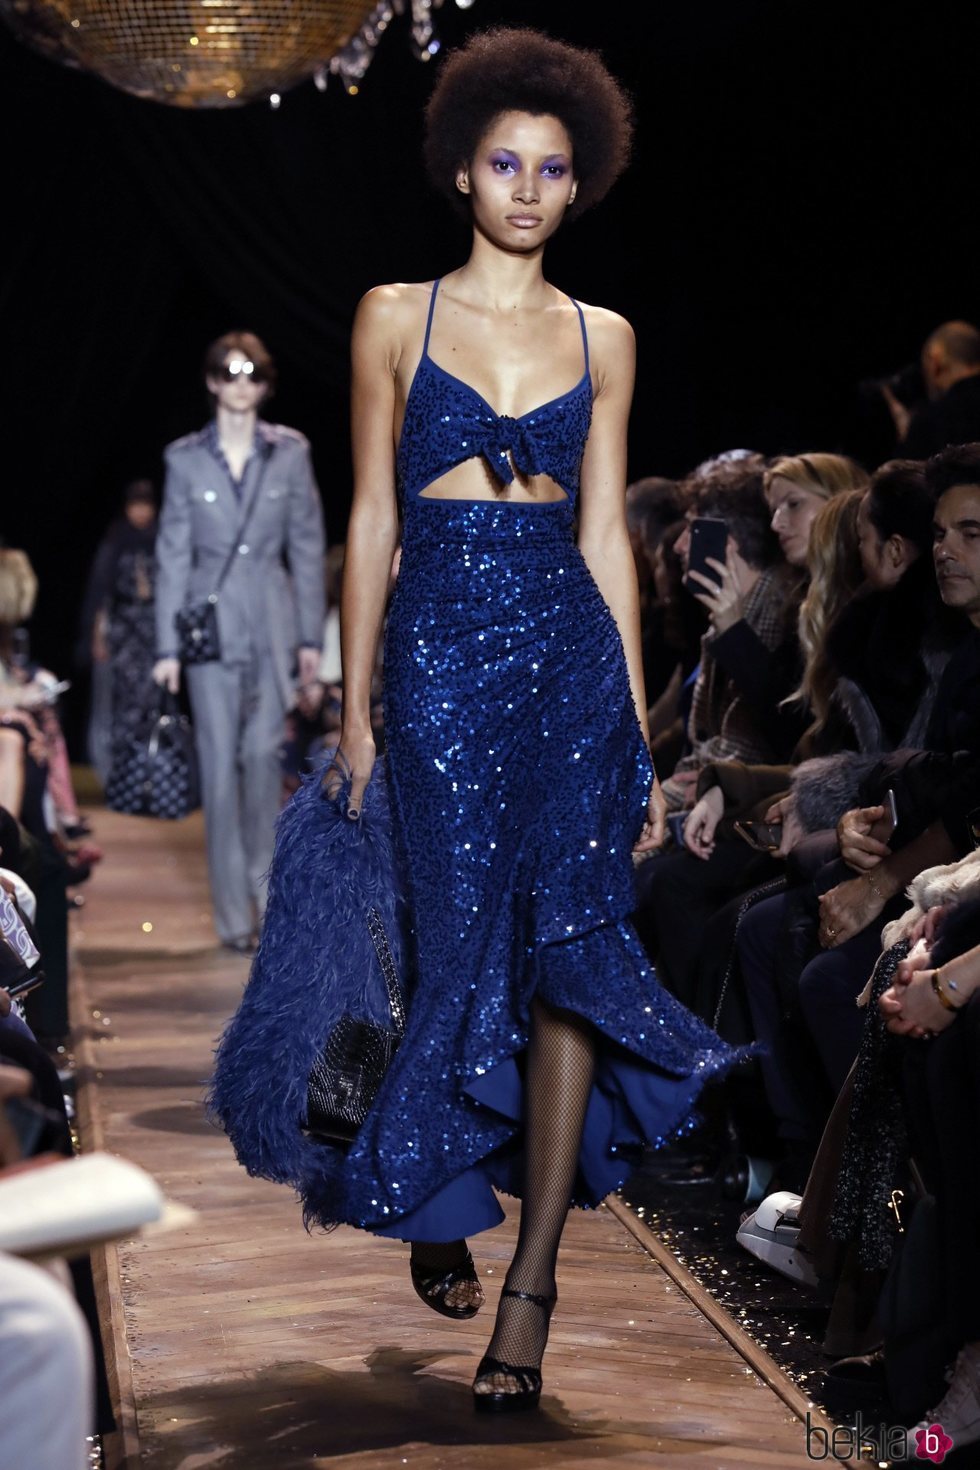 Vestido azul asimétrico de Michael Kors en la New York Fashion Week 2019